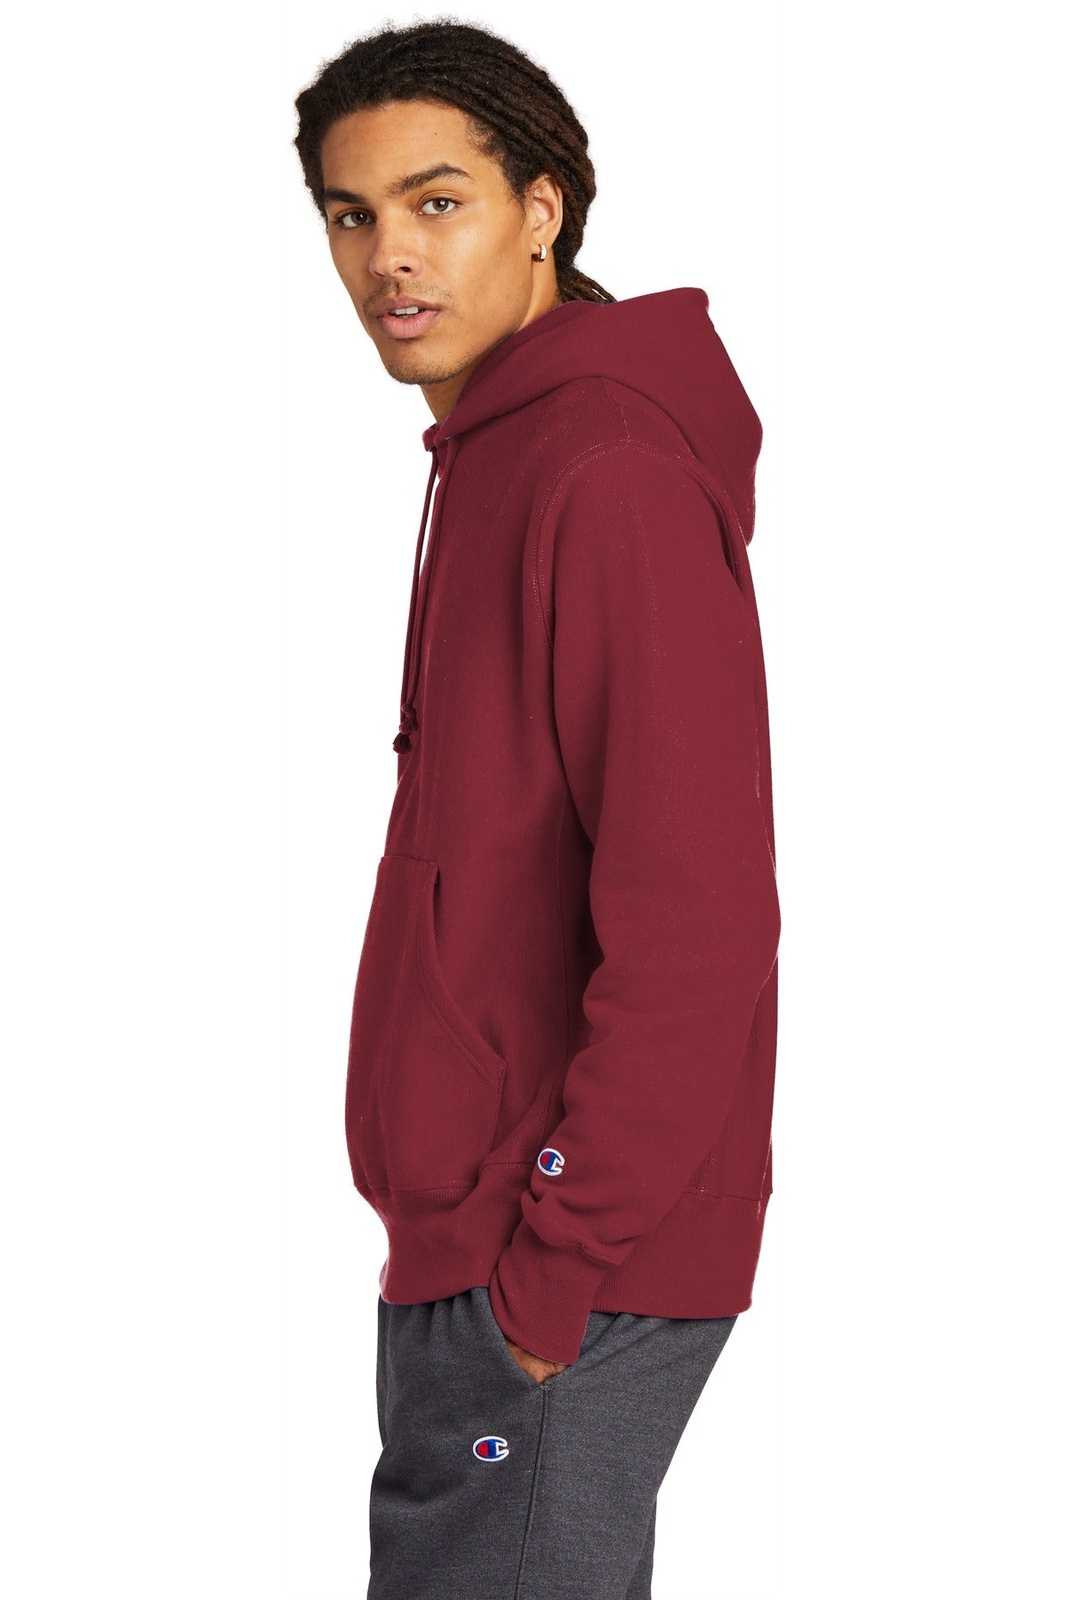 Champion S101 Reverse Weave Hooded Sweatshirt - Cardinal - HIT a Double